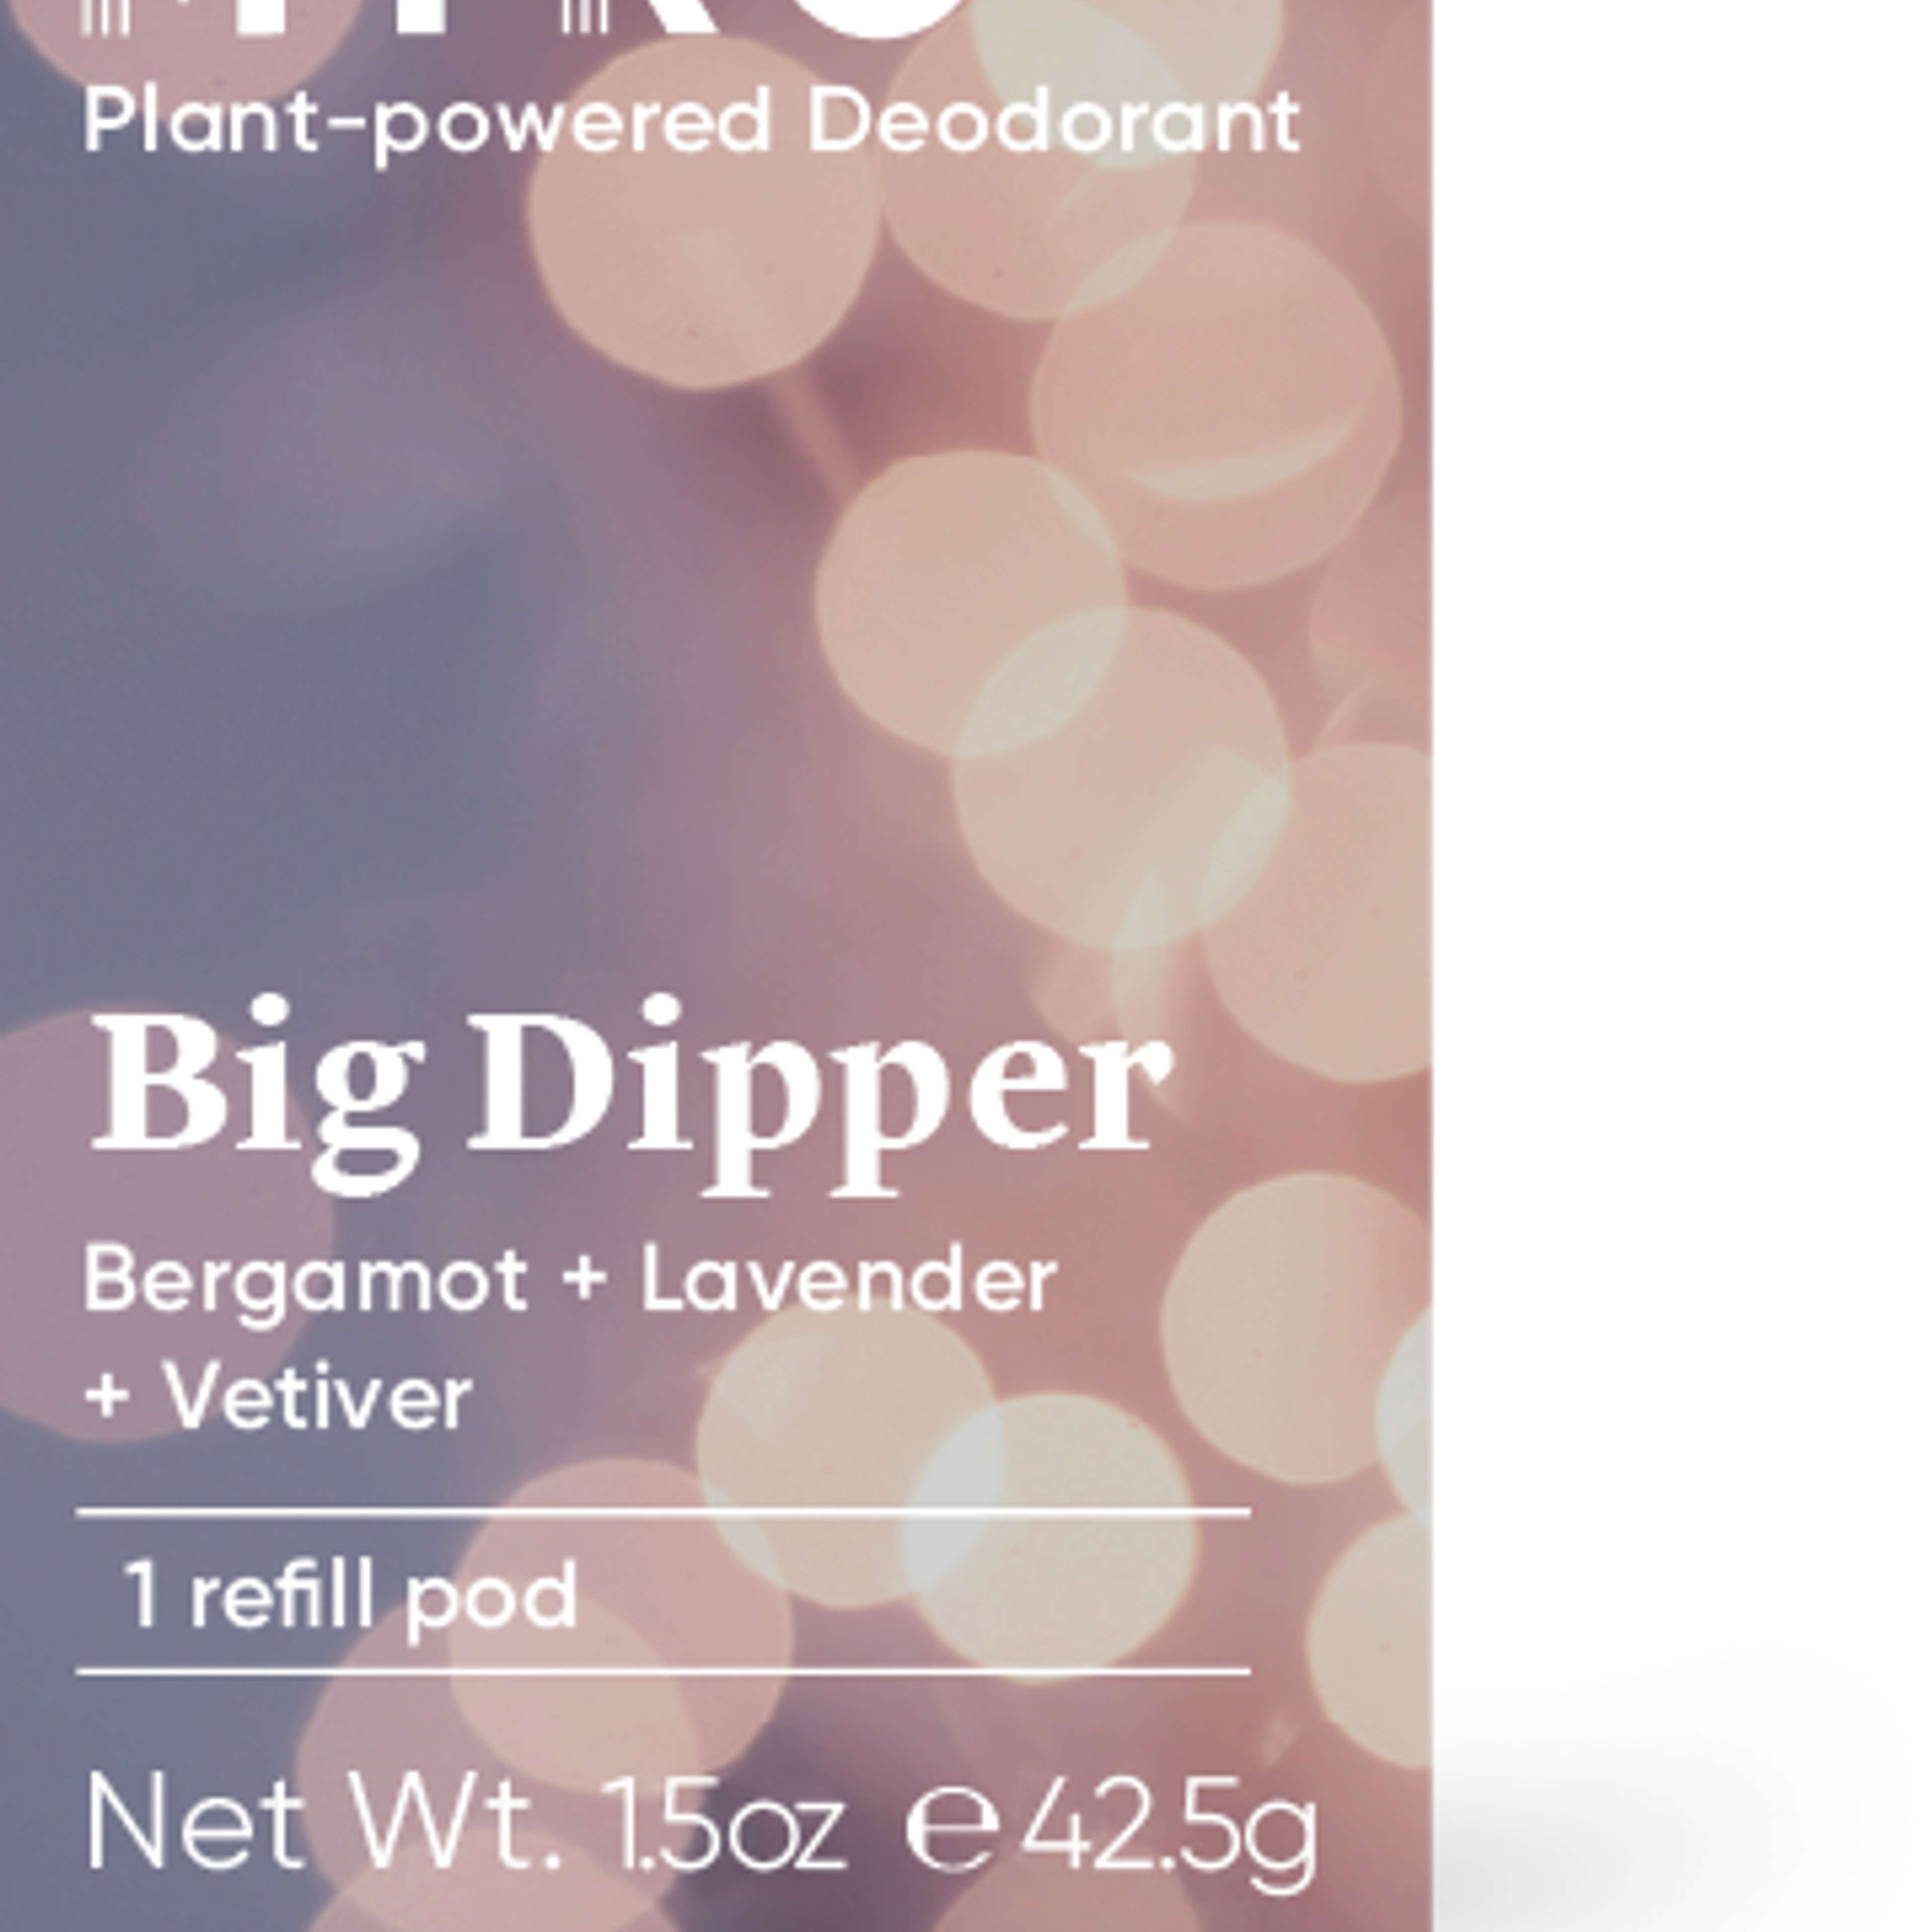 Big Dipper Deodorant